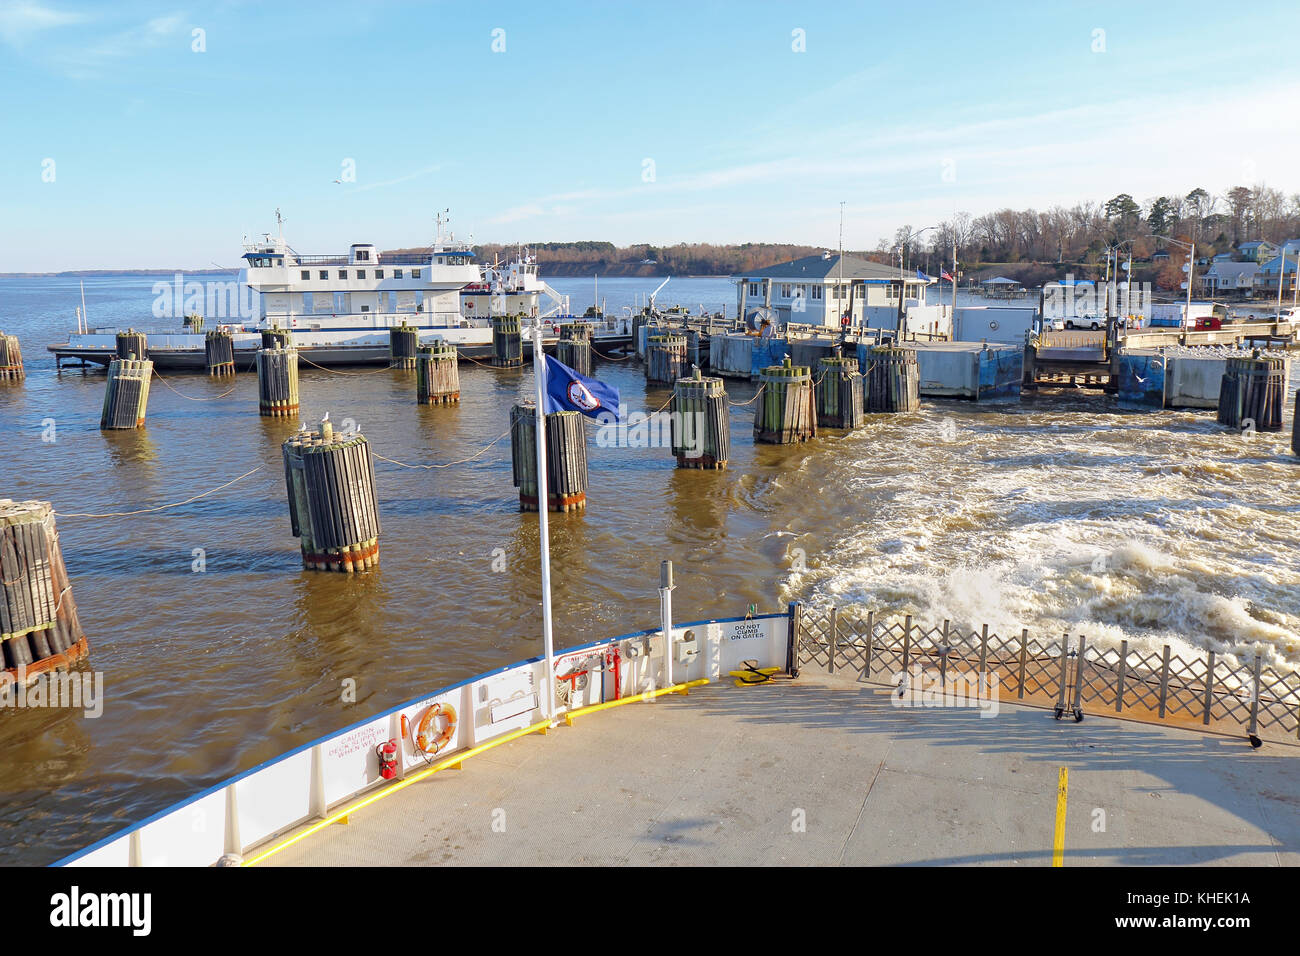 SCOTLAND, VIRGINIA - FEBRUARY 20 2017: Ferry boat leaving the Jamestown-Scotland Ferry docks on its run between Jamestown Island and Surrey. This hist Stock Photo